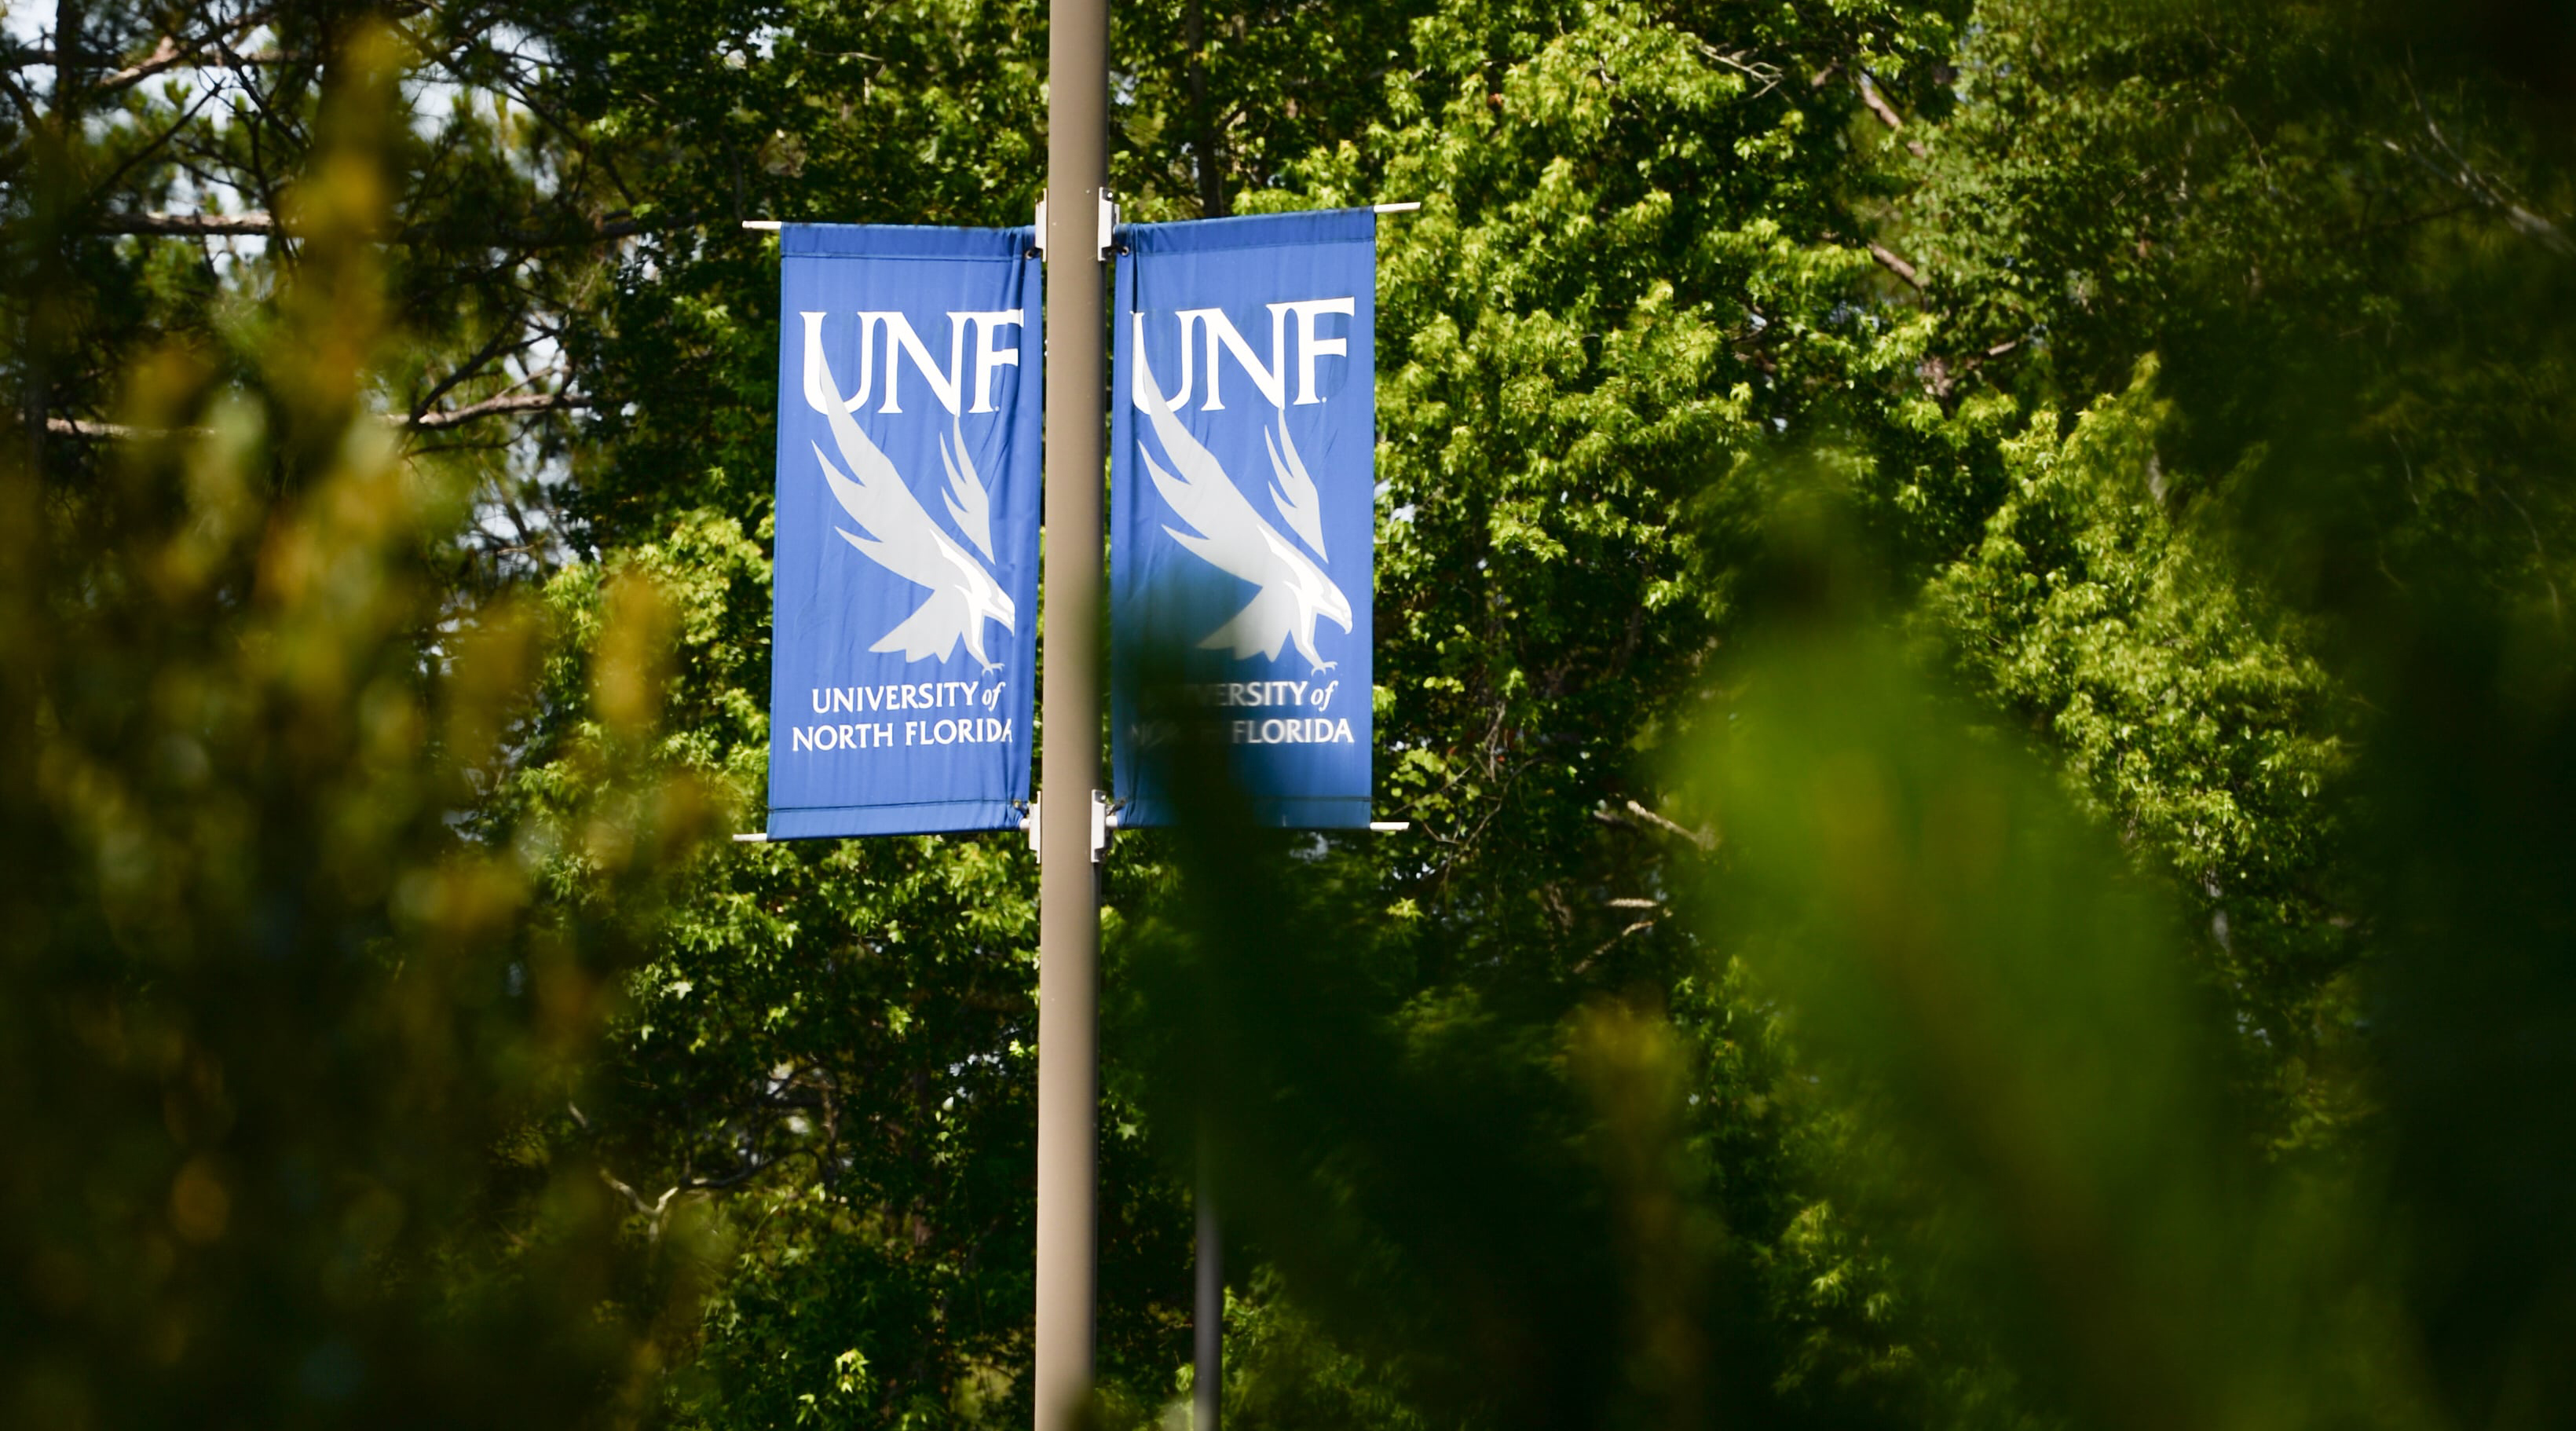 UNF street banners